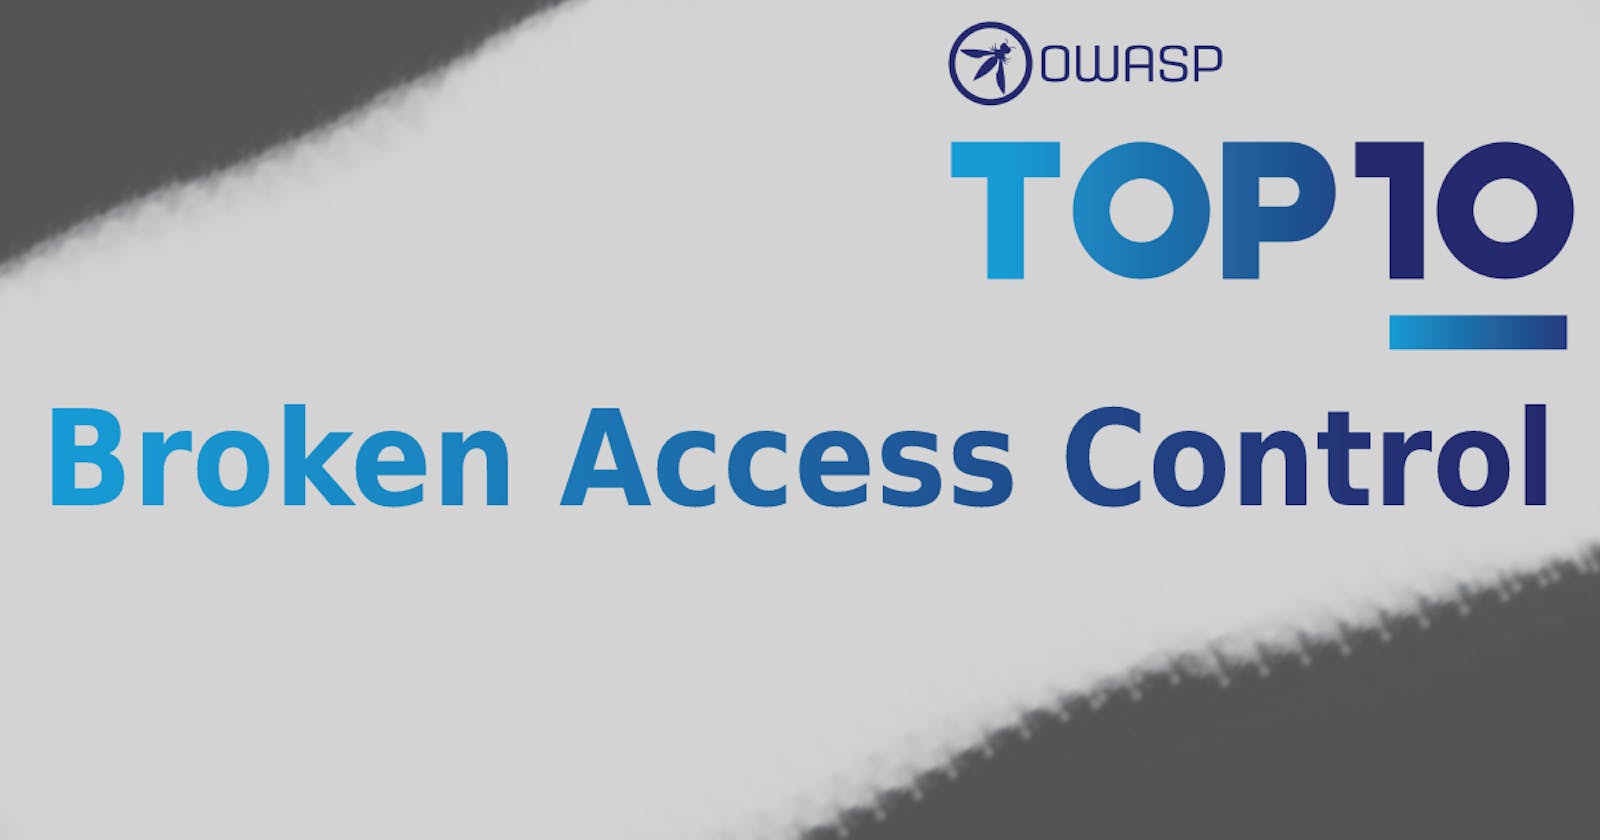 OWASP TOP 10: Broken Access Control